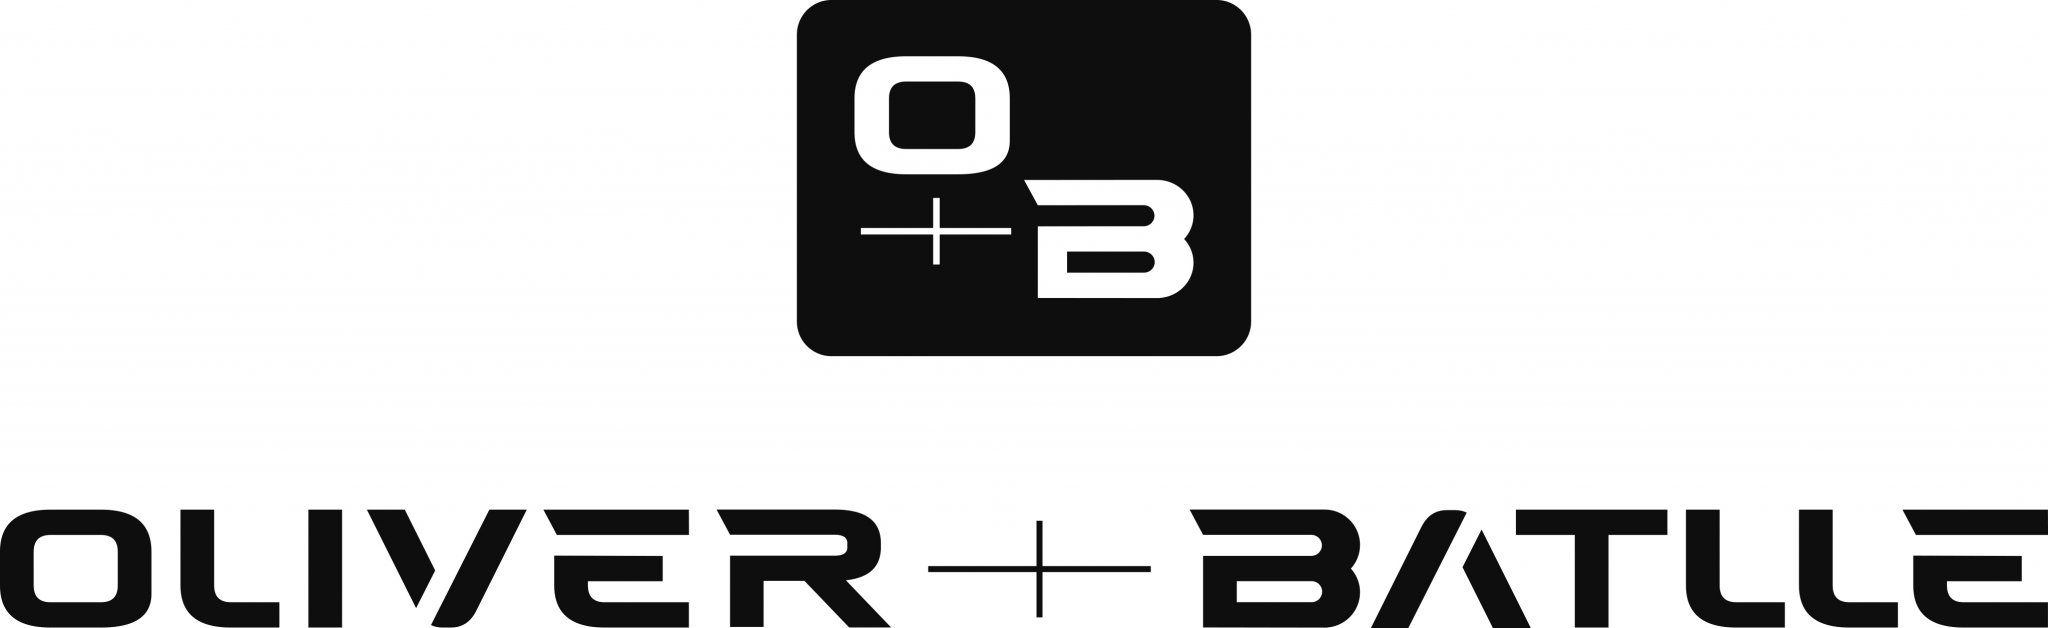 Logo OLIVER Y BATLLE S.A.U.